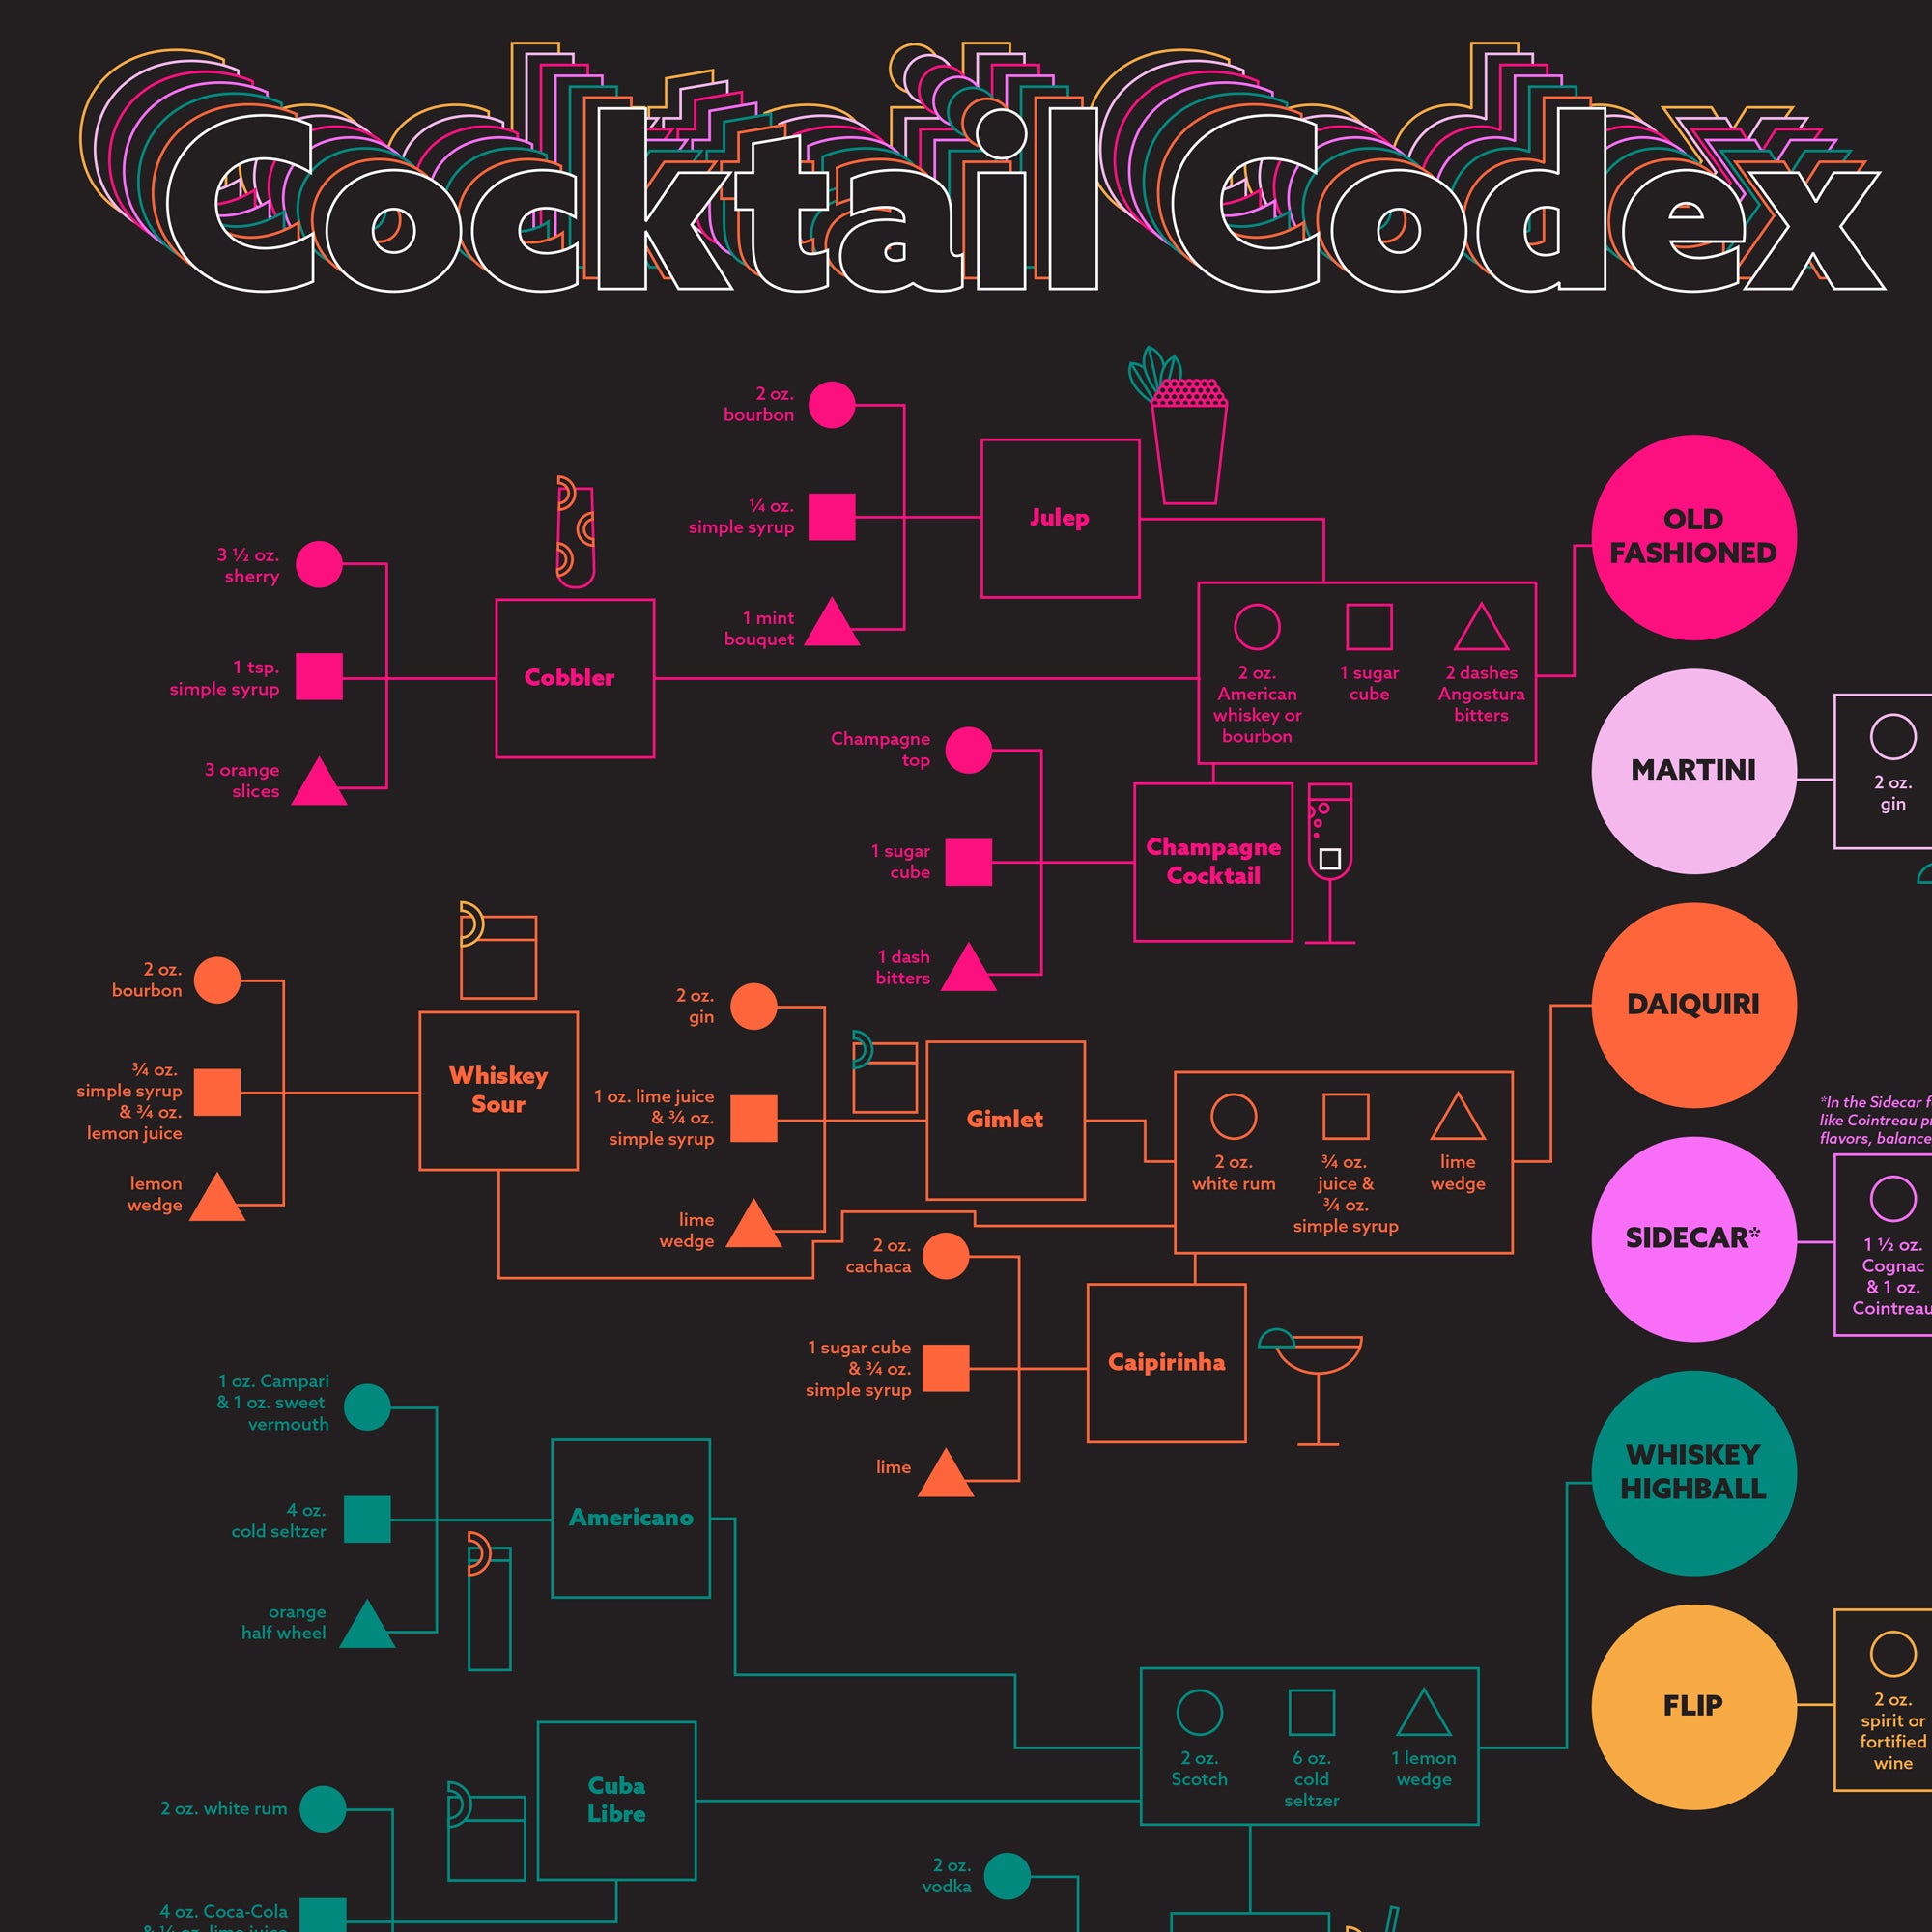 Cocktail Store VinePair Poster - Codex The